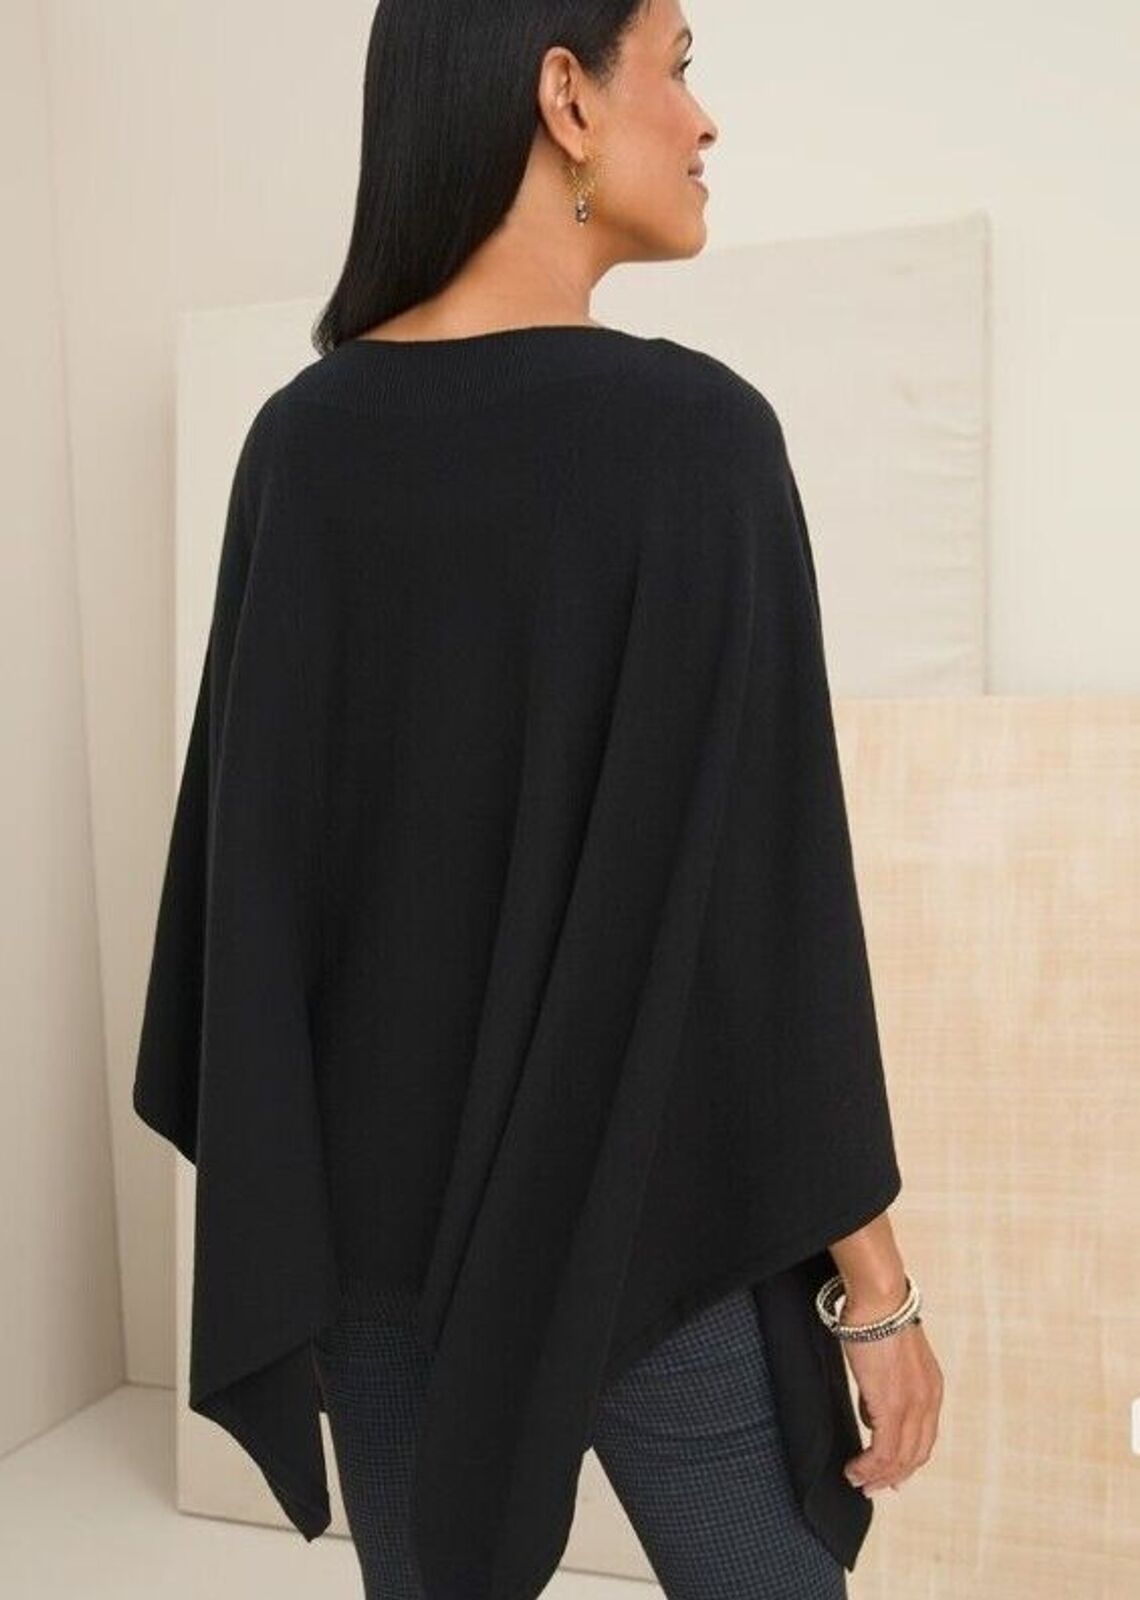 Chicos Sweater Womens S/M Black Cotton Cashmere B… - image 6